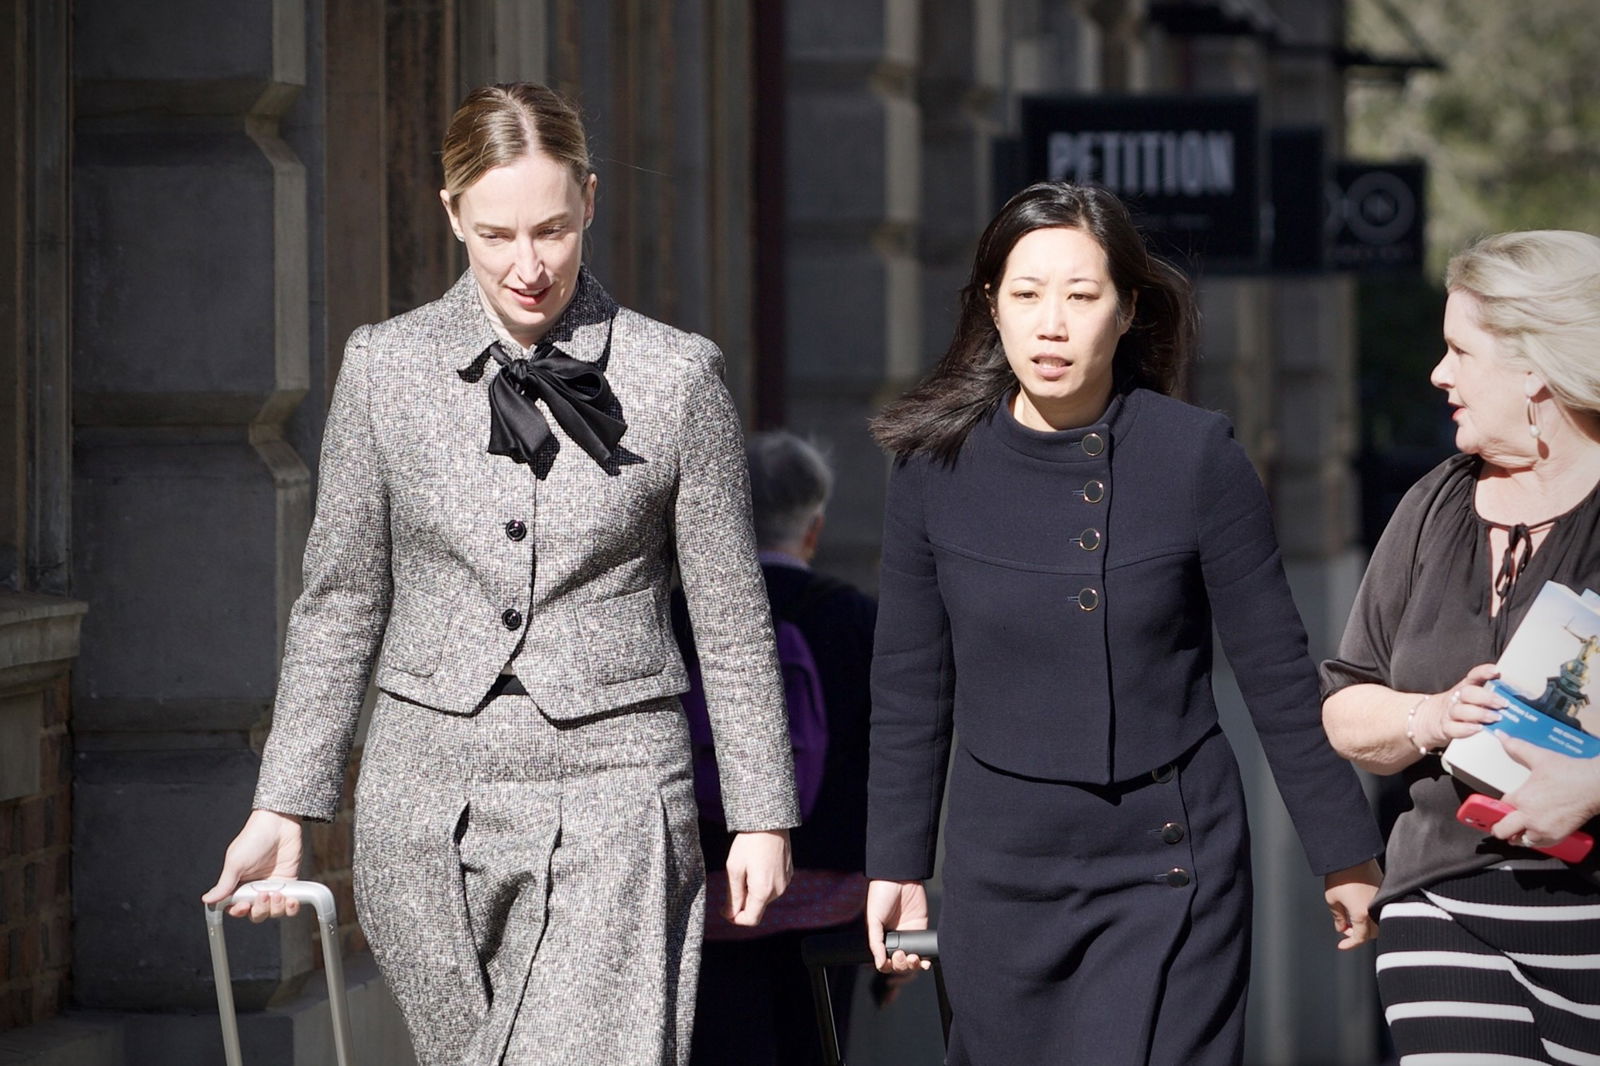 Two smartly dressed women walk on a city street. 